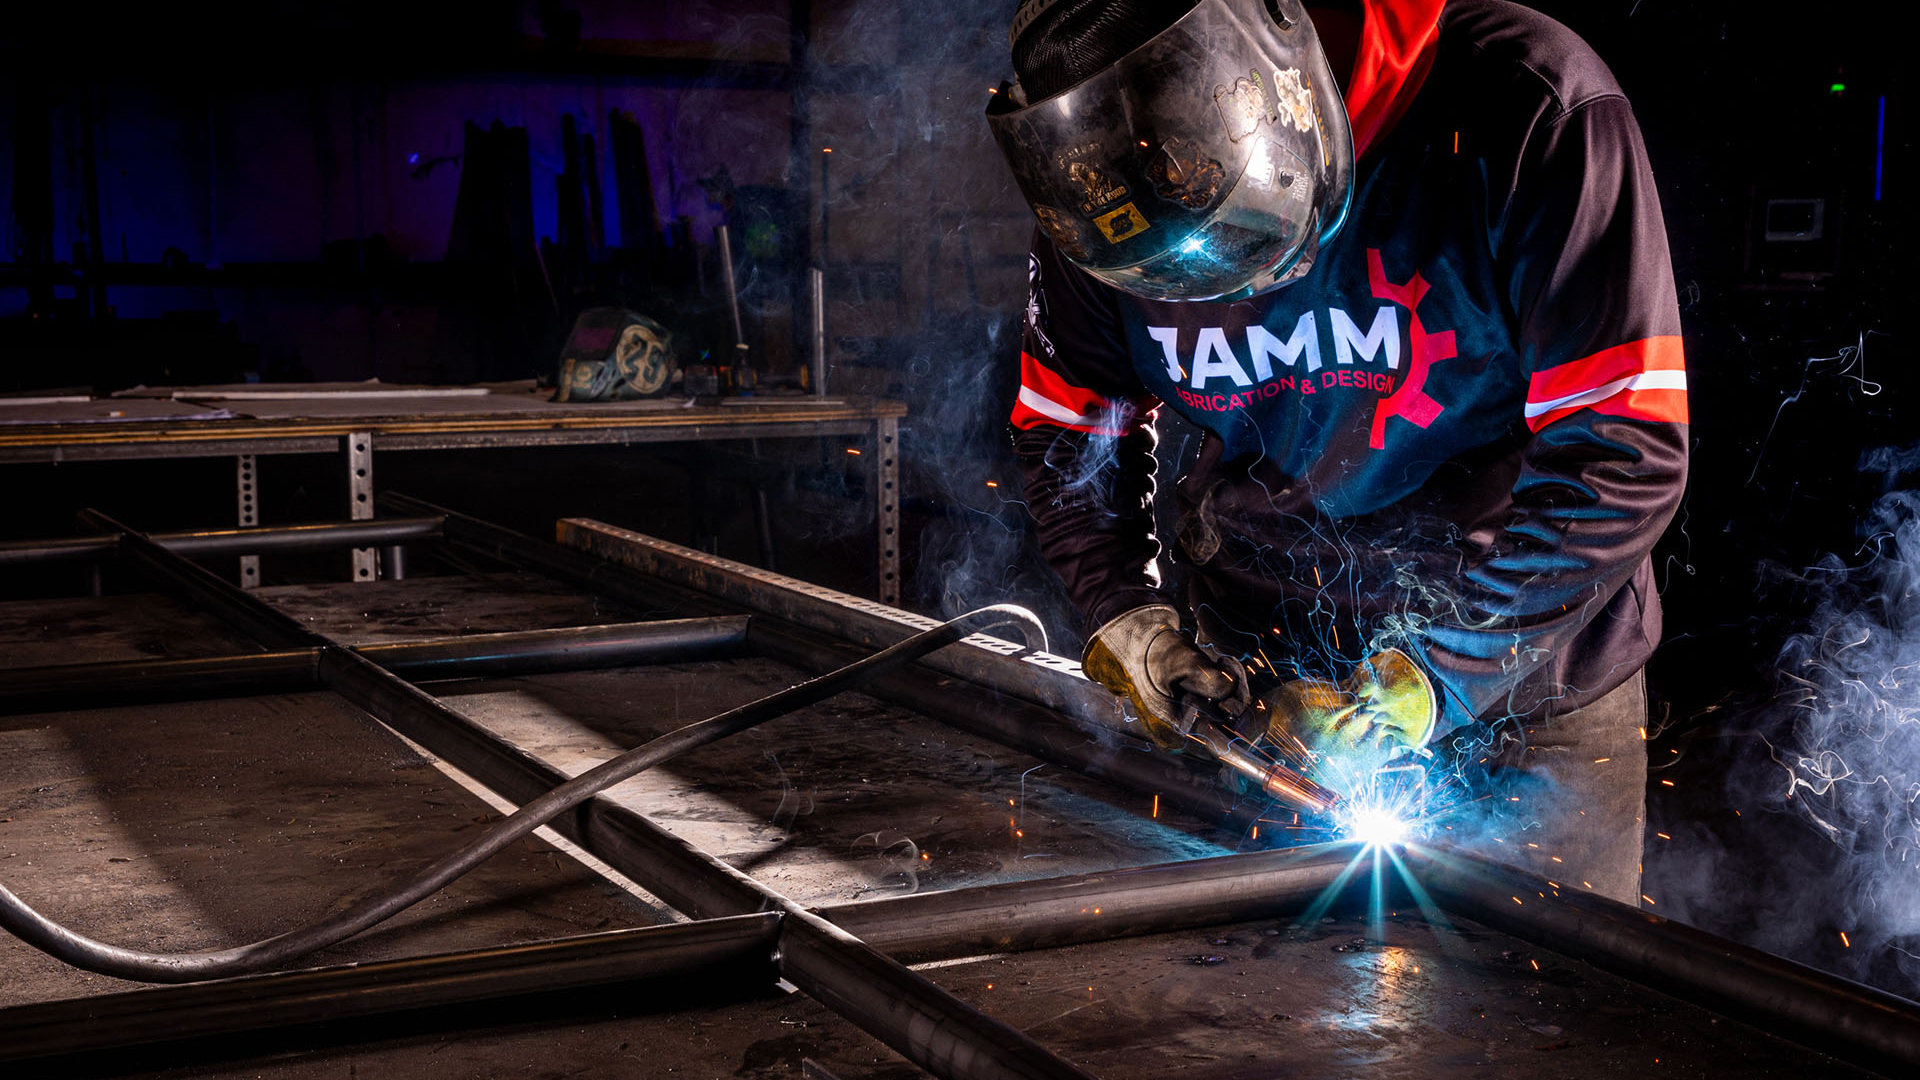 JAMM Fabrication & Design welding